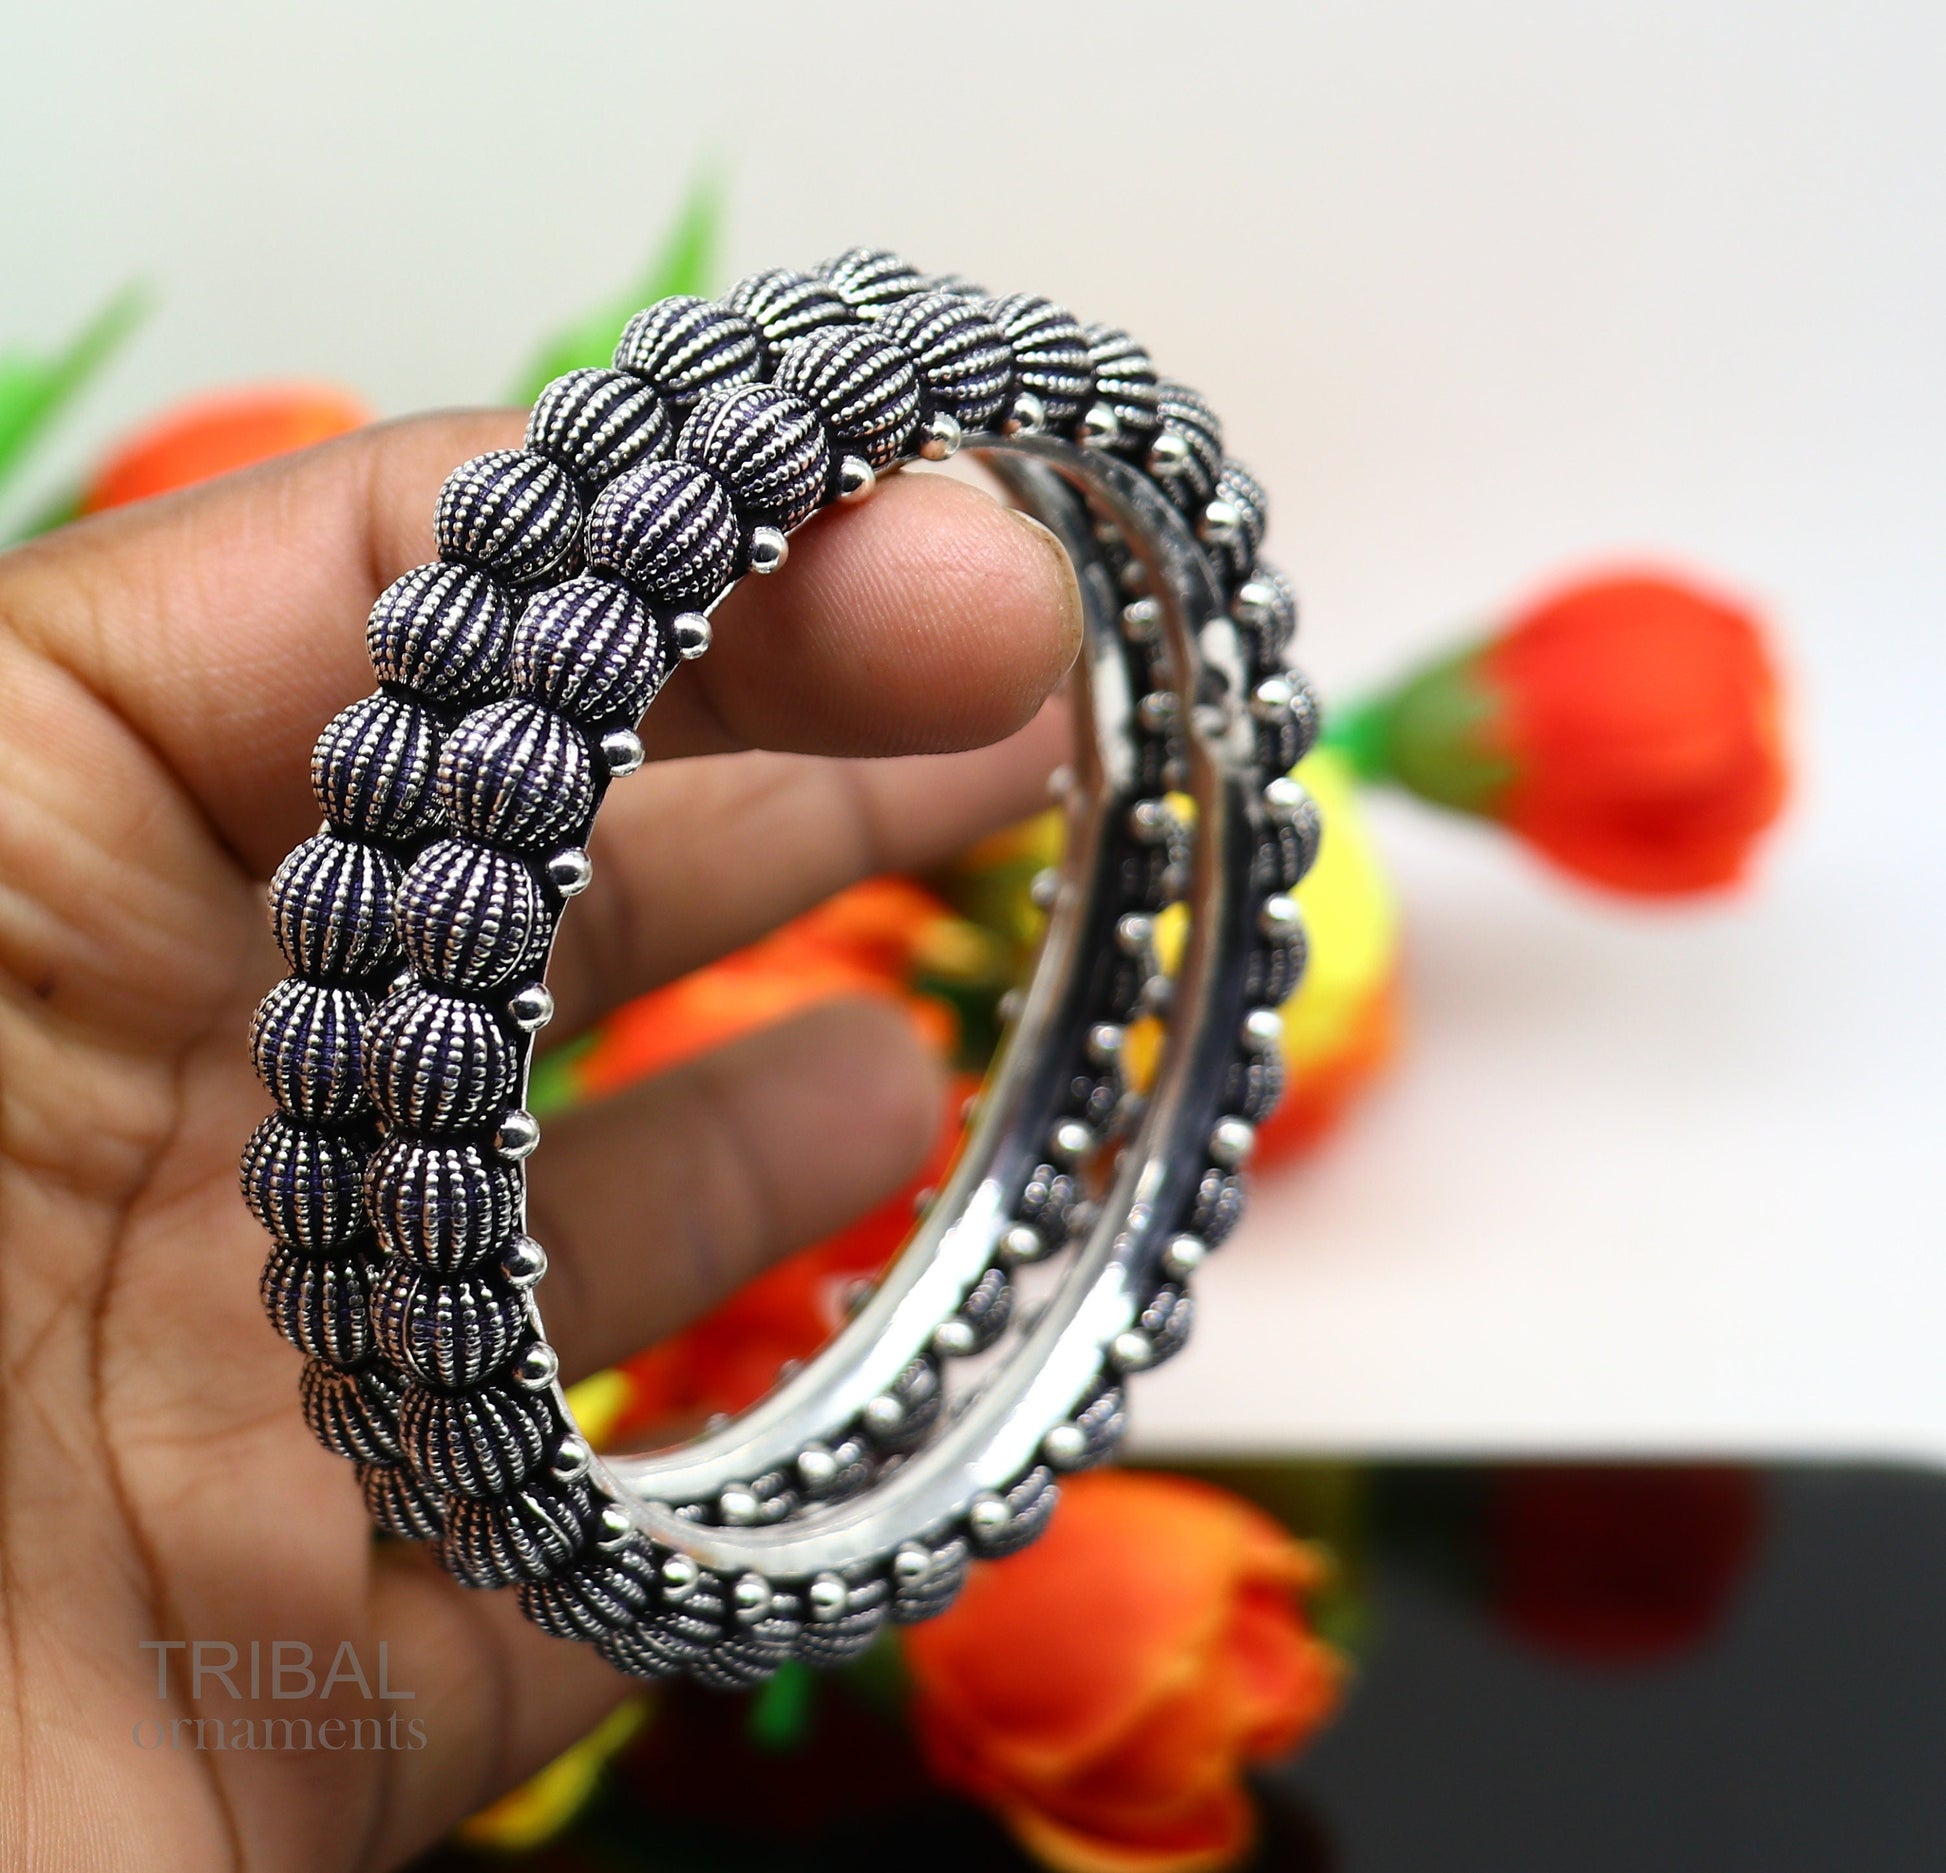 925 sterling silver handmade Indian vintage design bangle bracelet kada stunning stylish tribal brides jewelry gifting ethnic bangles ba122 - TRIBAL ORNAMENTS